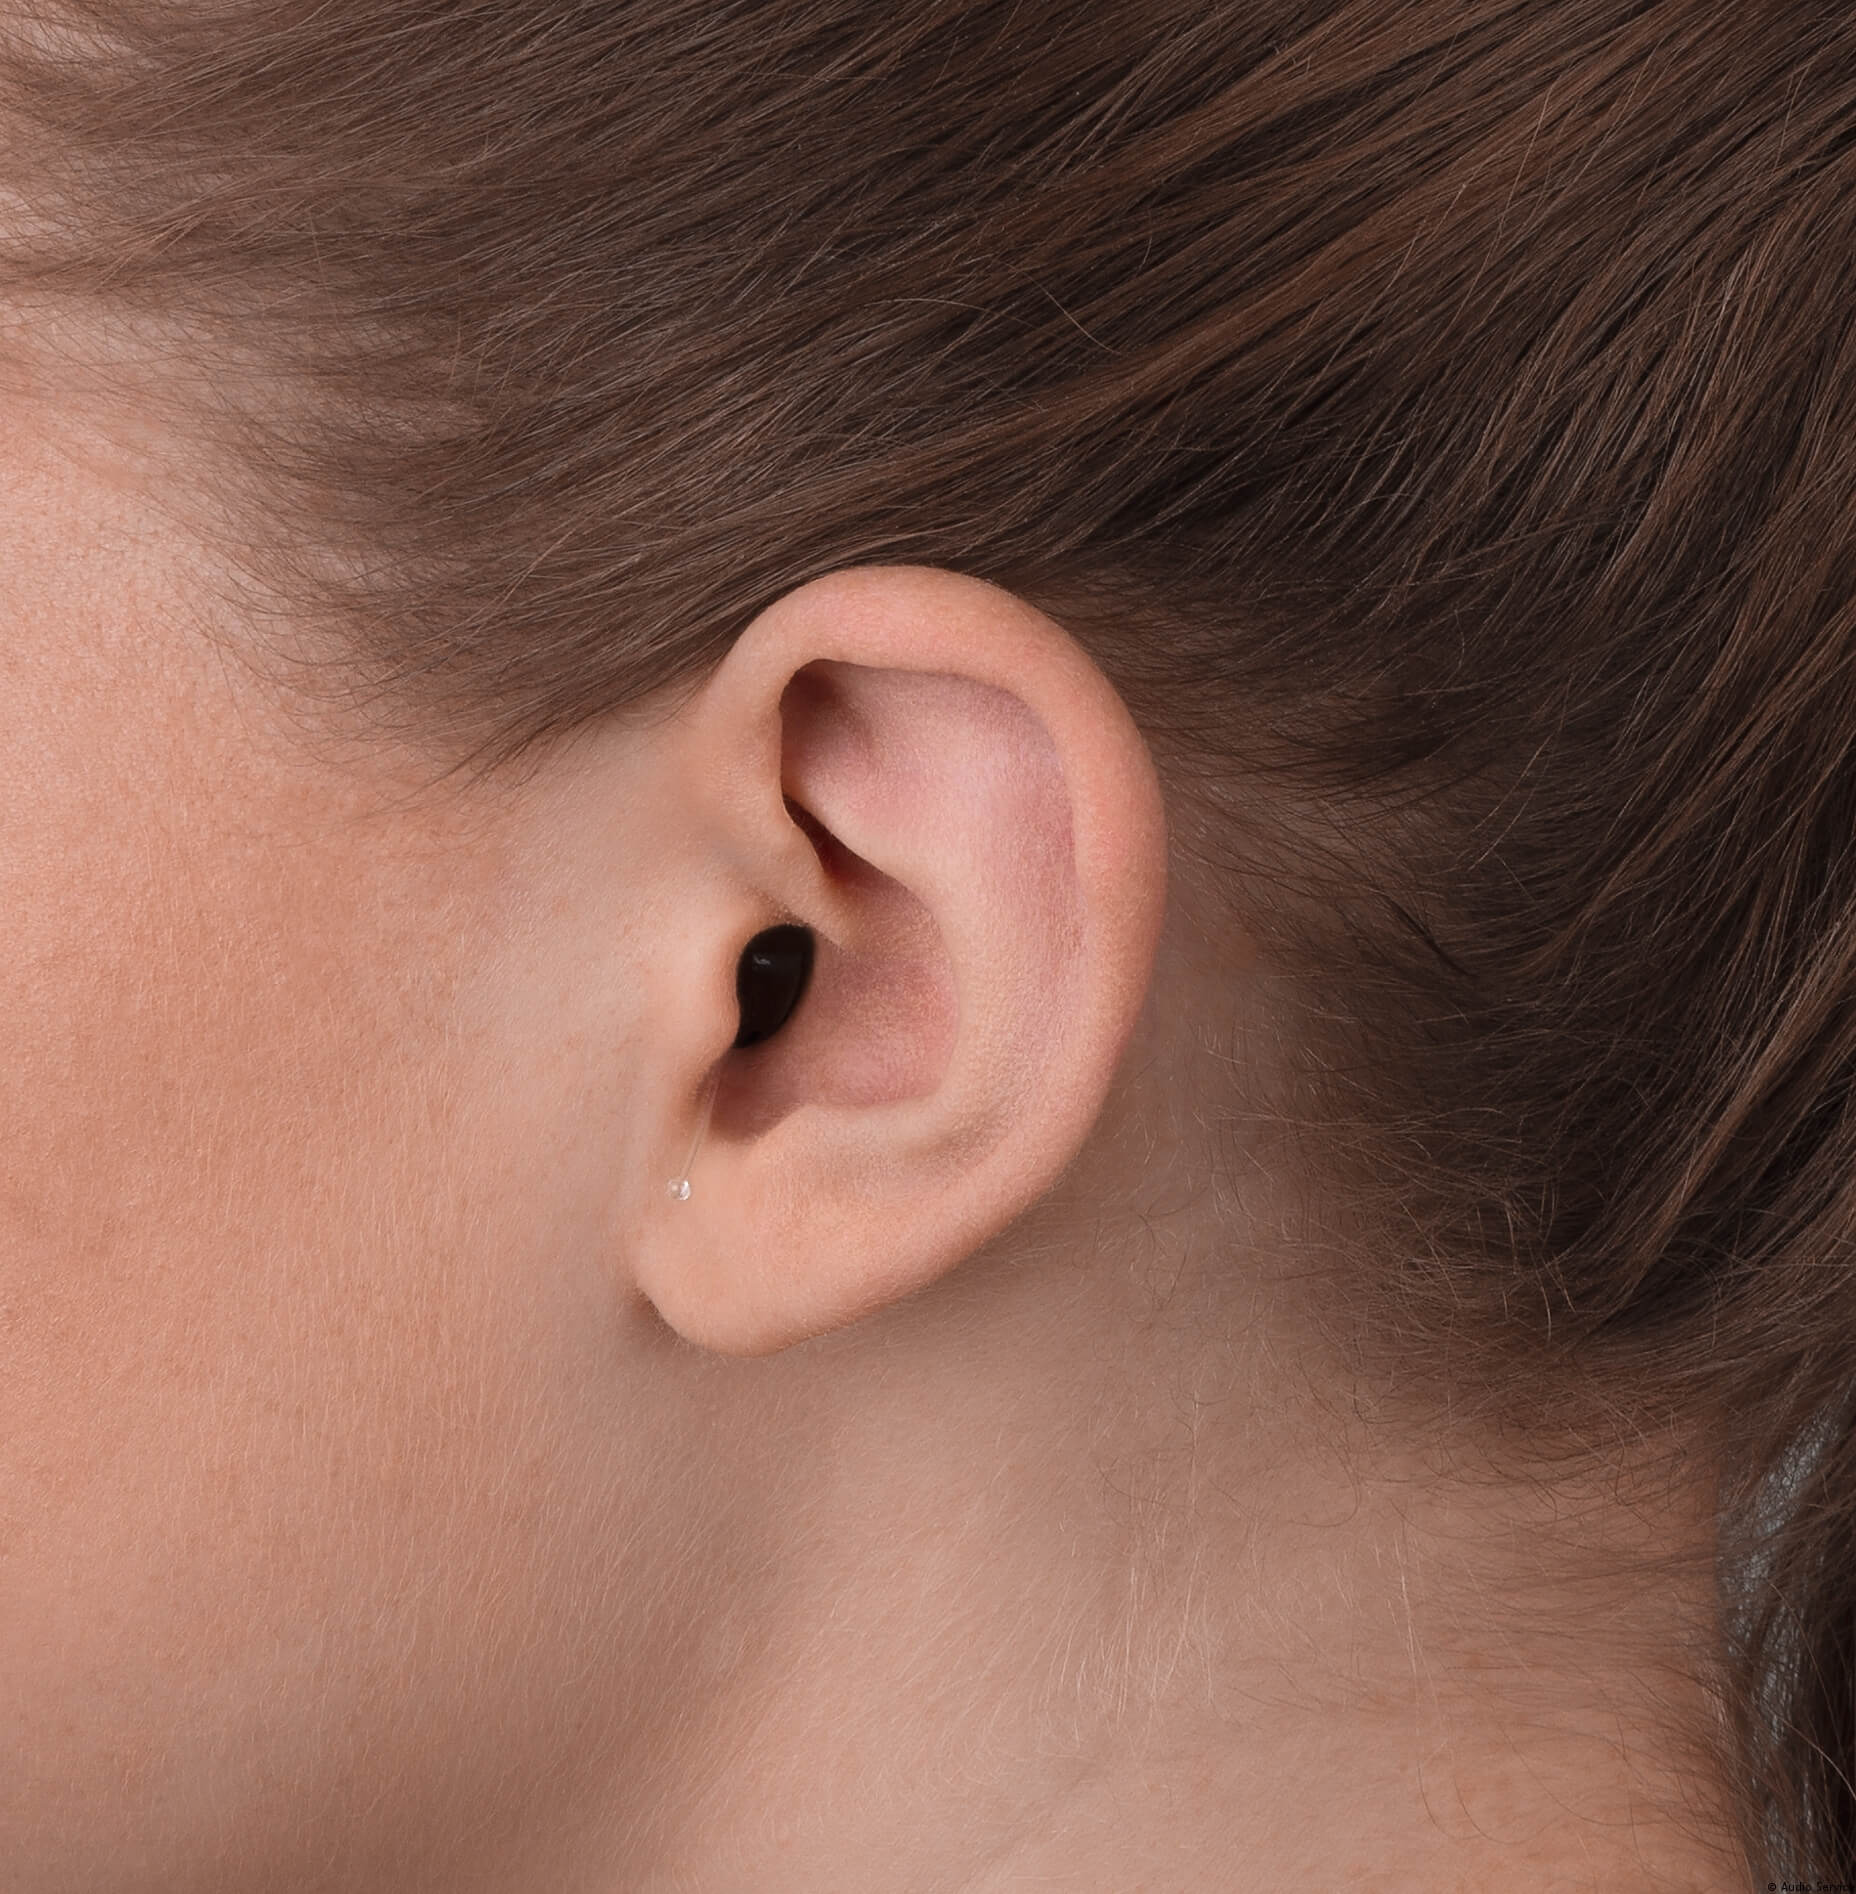 Hörgerät im Ohr eingesetzt